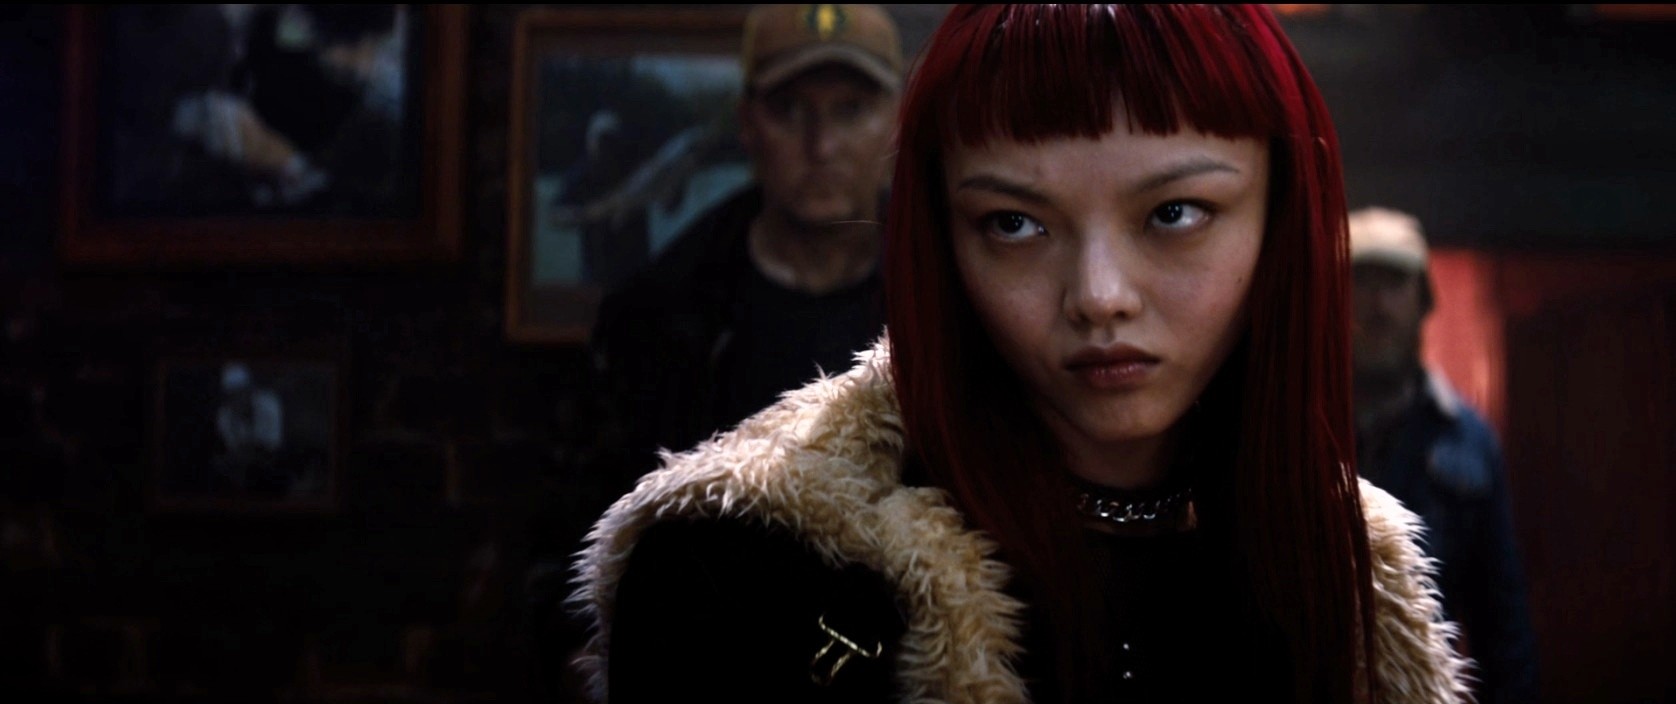 Rila Fukushima stars as Yukio in 20th Century Fox's The Wolverine (2013). Photo credit by Ben Rothstein.